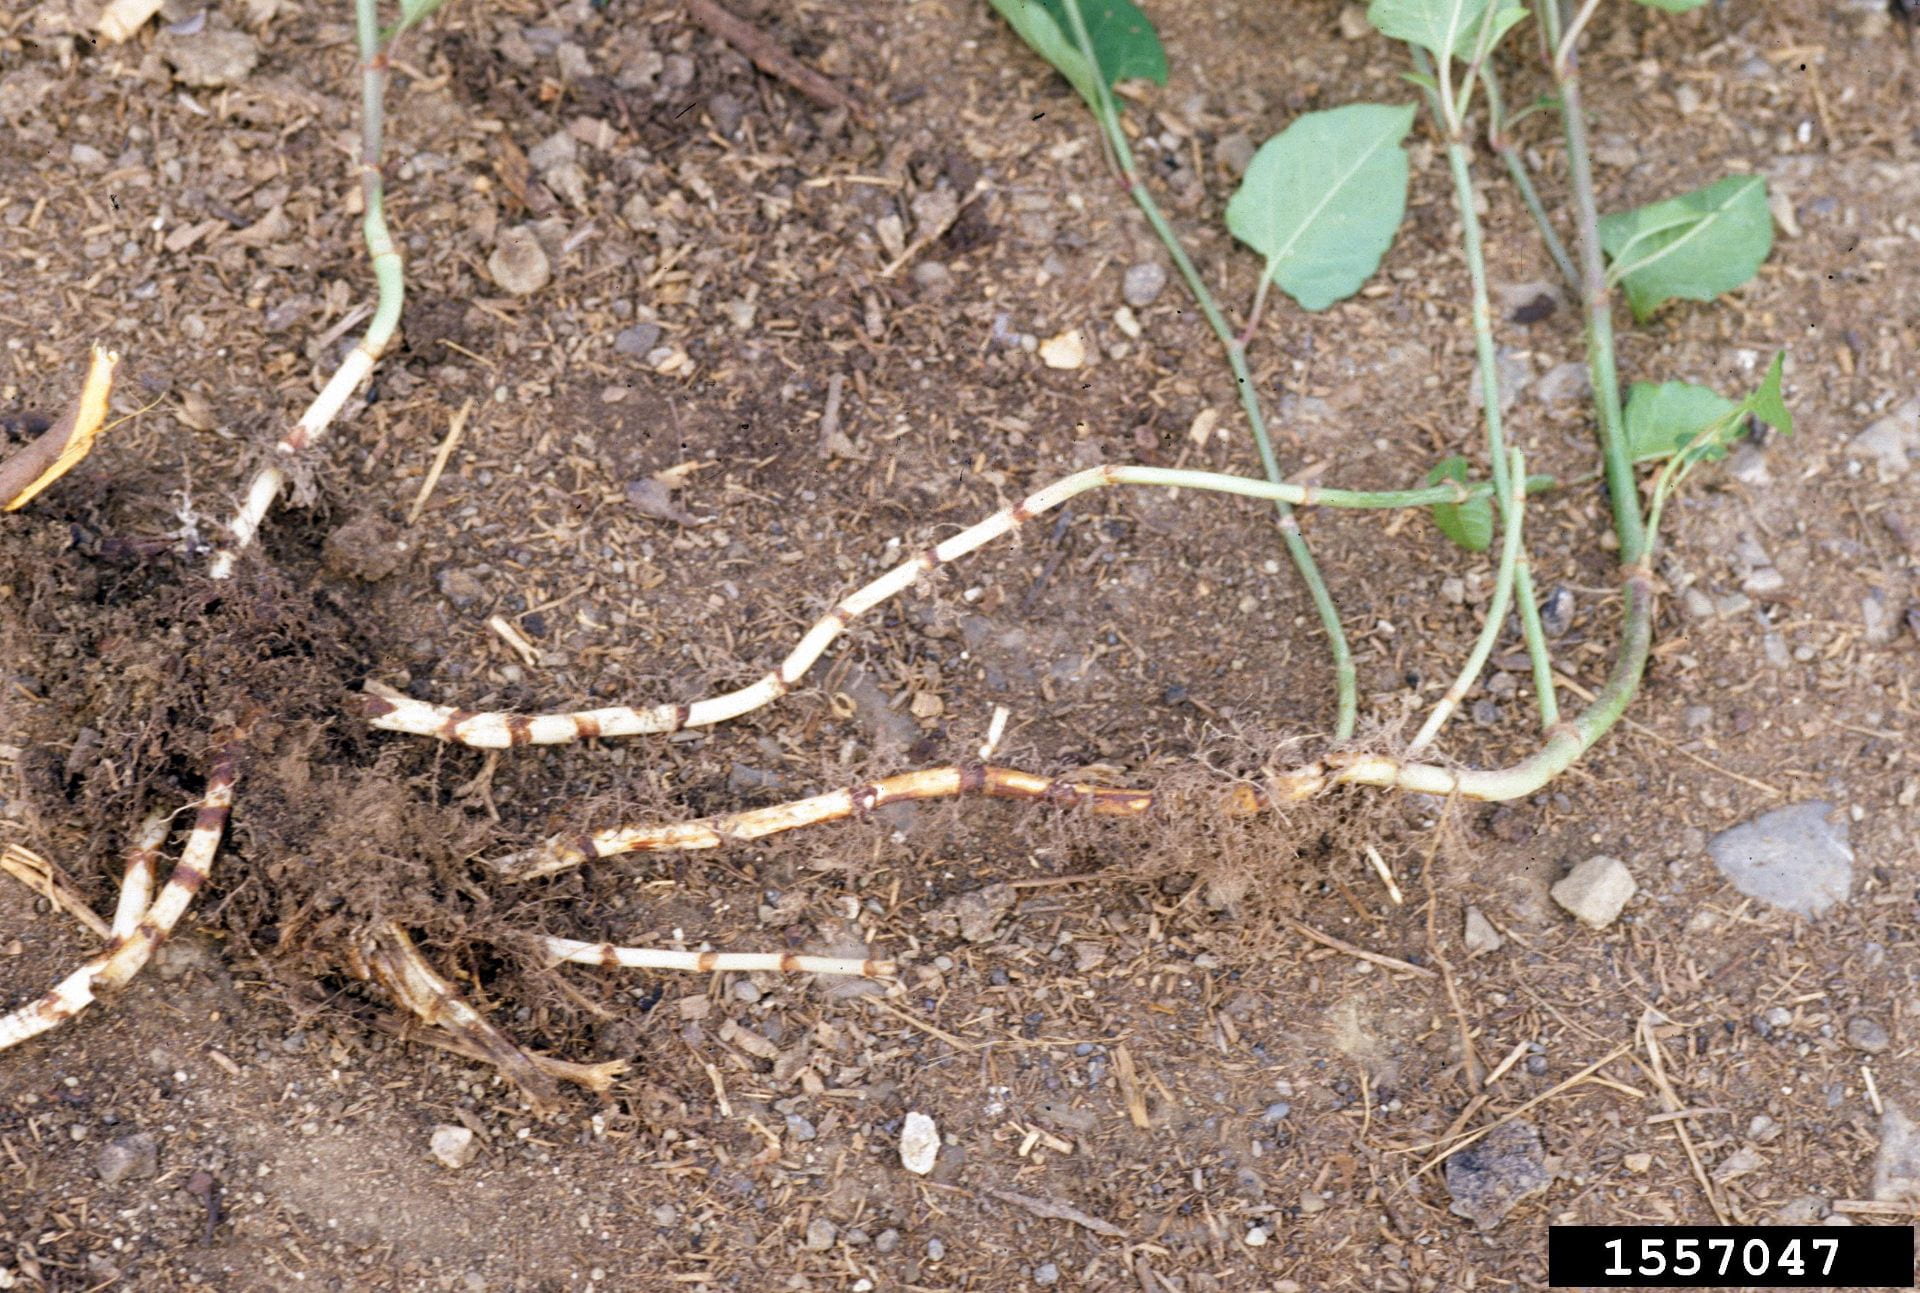 Japanese knotweed root structure. Photo by John Cardina of OSU, via Bugwood.org.